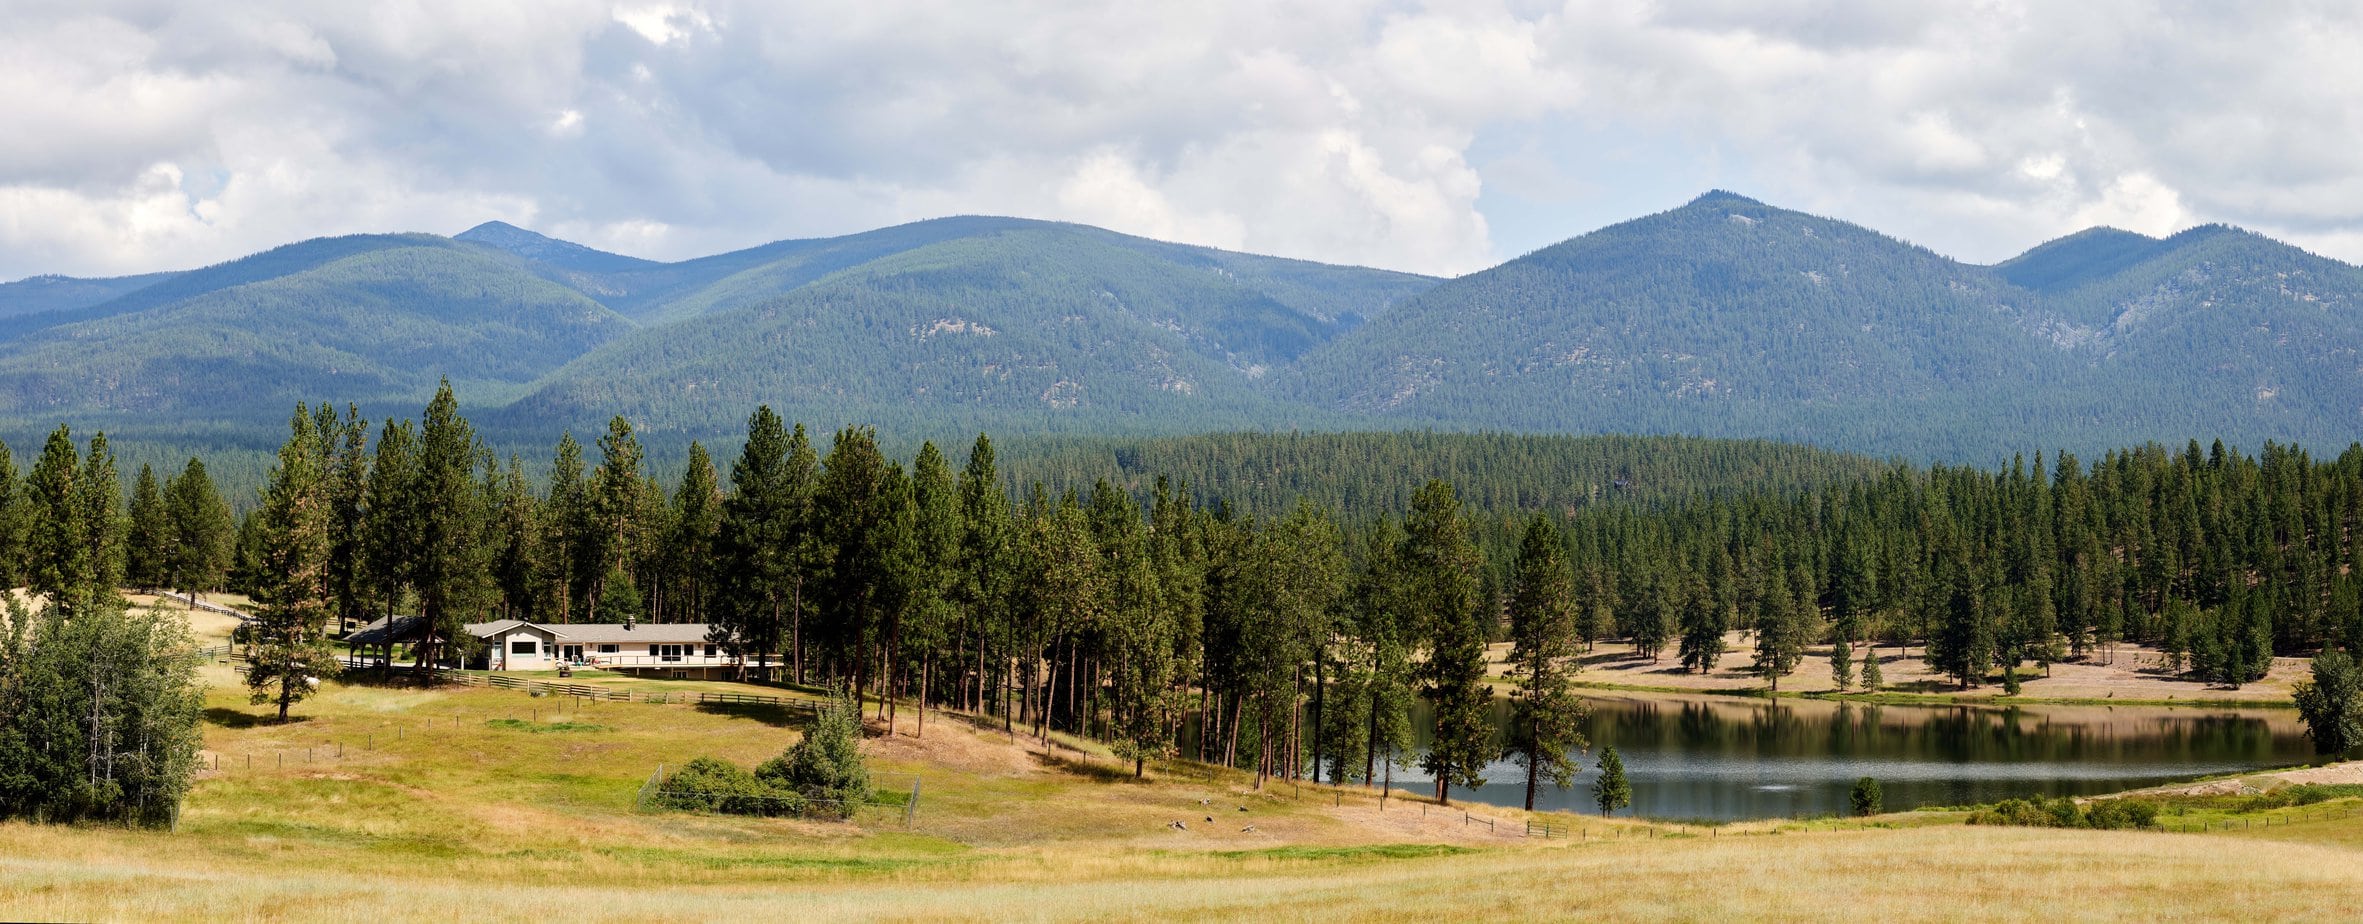 panoramic views montana checkpoint ranch